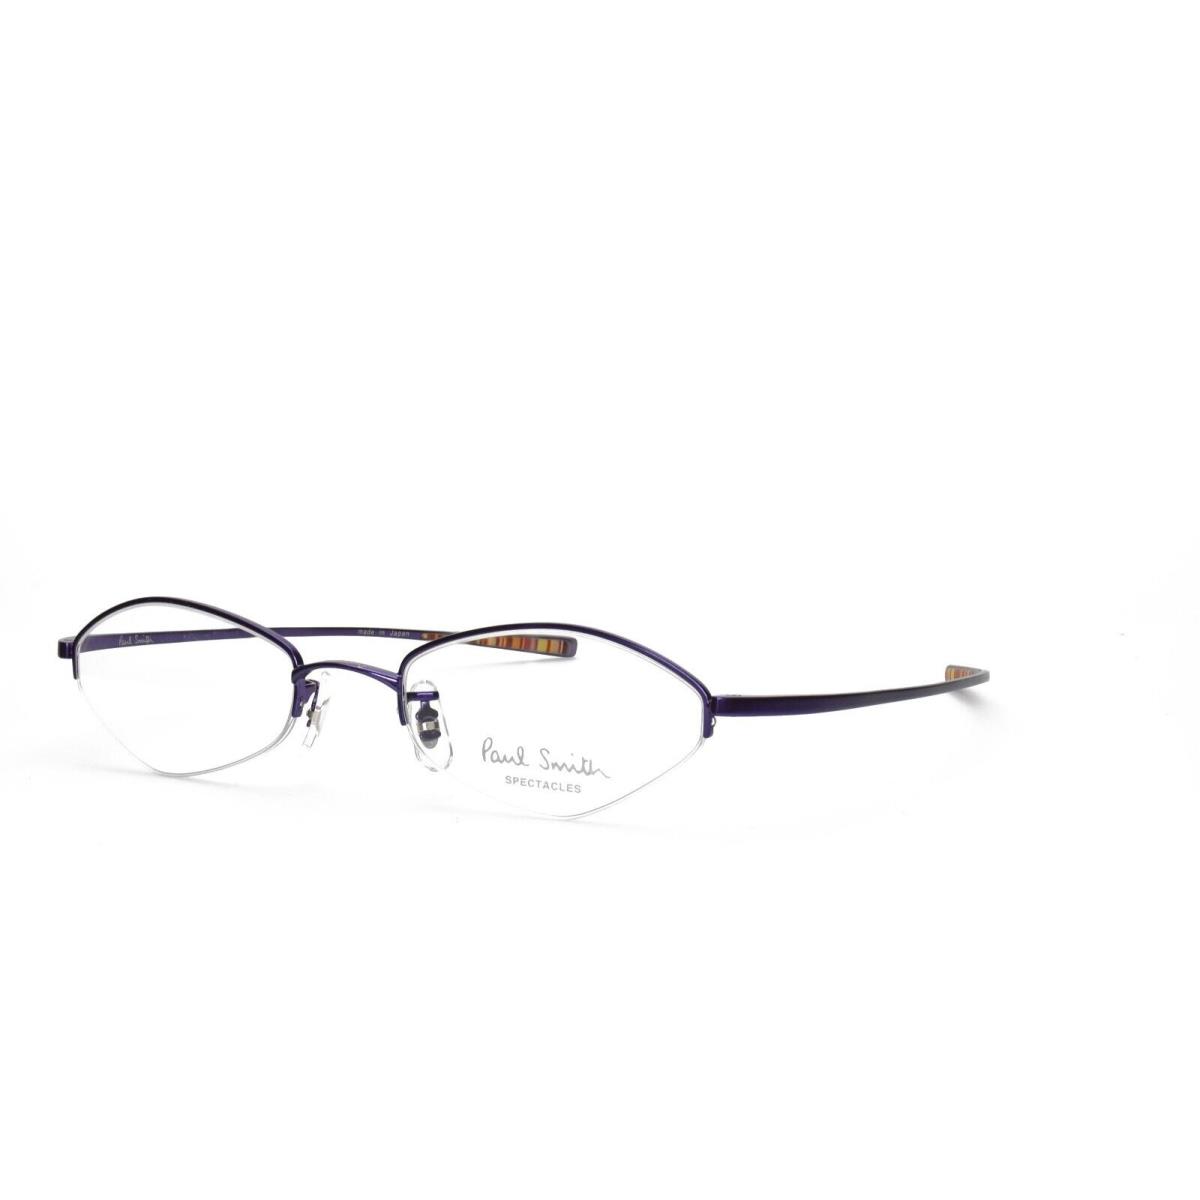 Paul Smith 179 Con 46-19-140 Purple Vtg Vintage Eyeglasses Frames